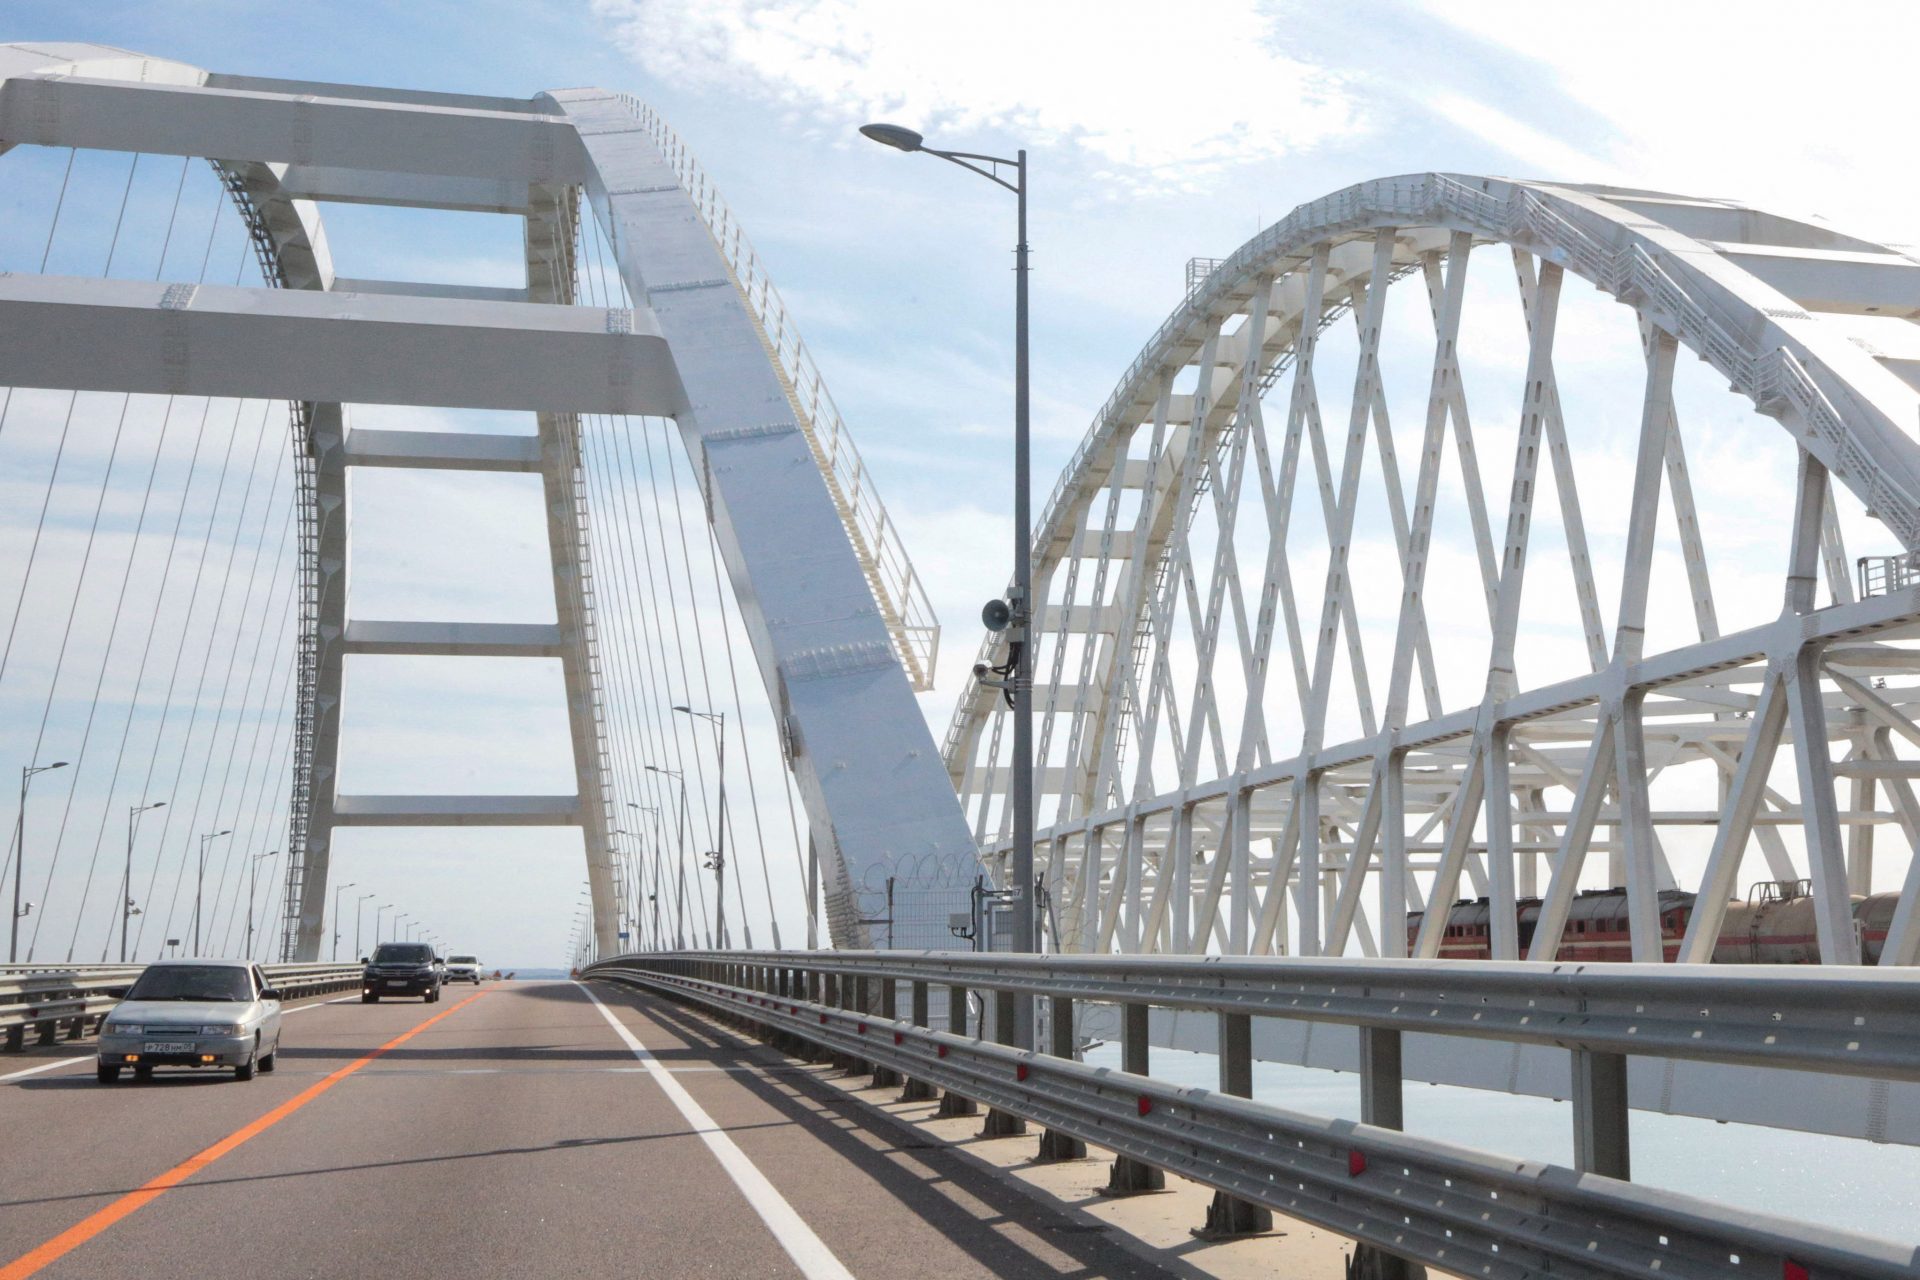 New details revealed about Kerch Bridge bombing by Ukrainian official